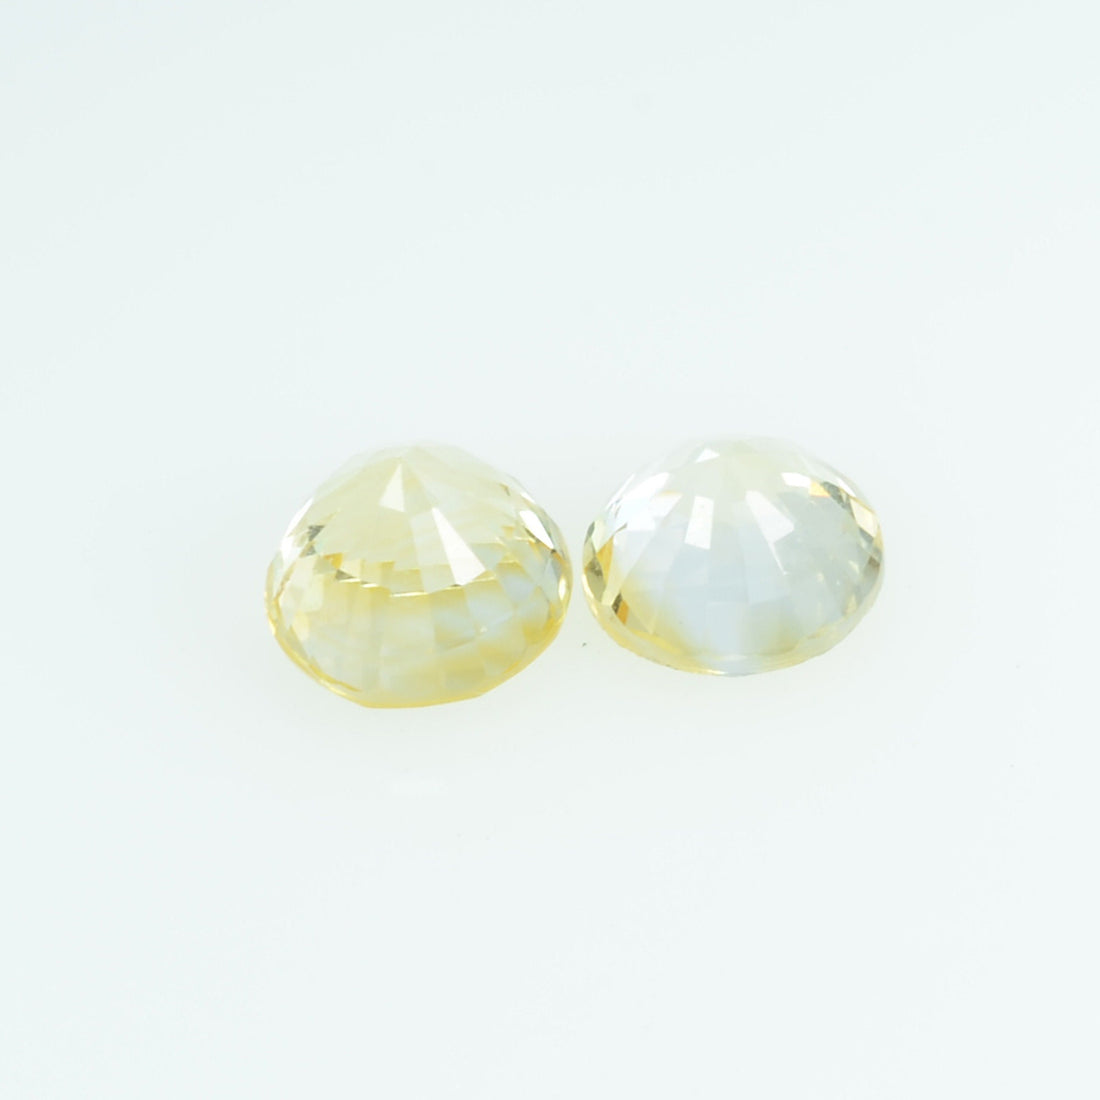 3.8 mm Natural Yellow Sapphire Loose Gemstone Round Cut